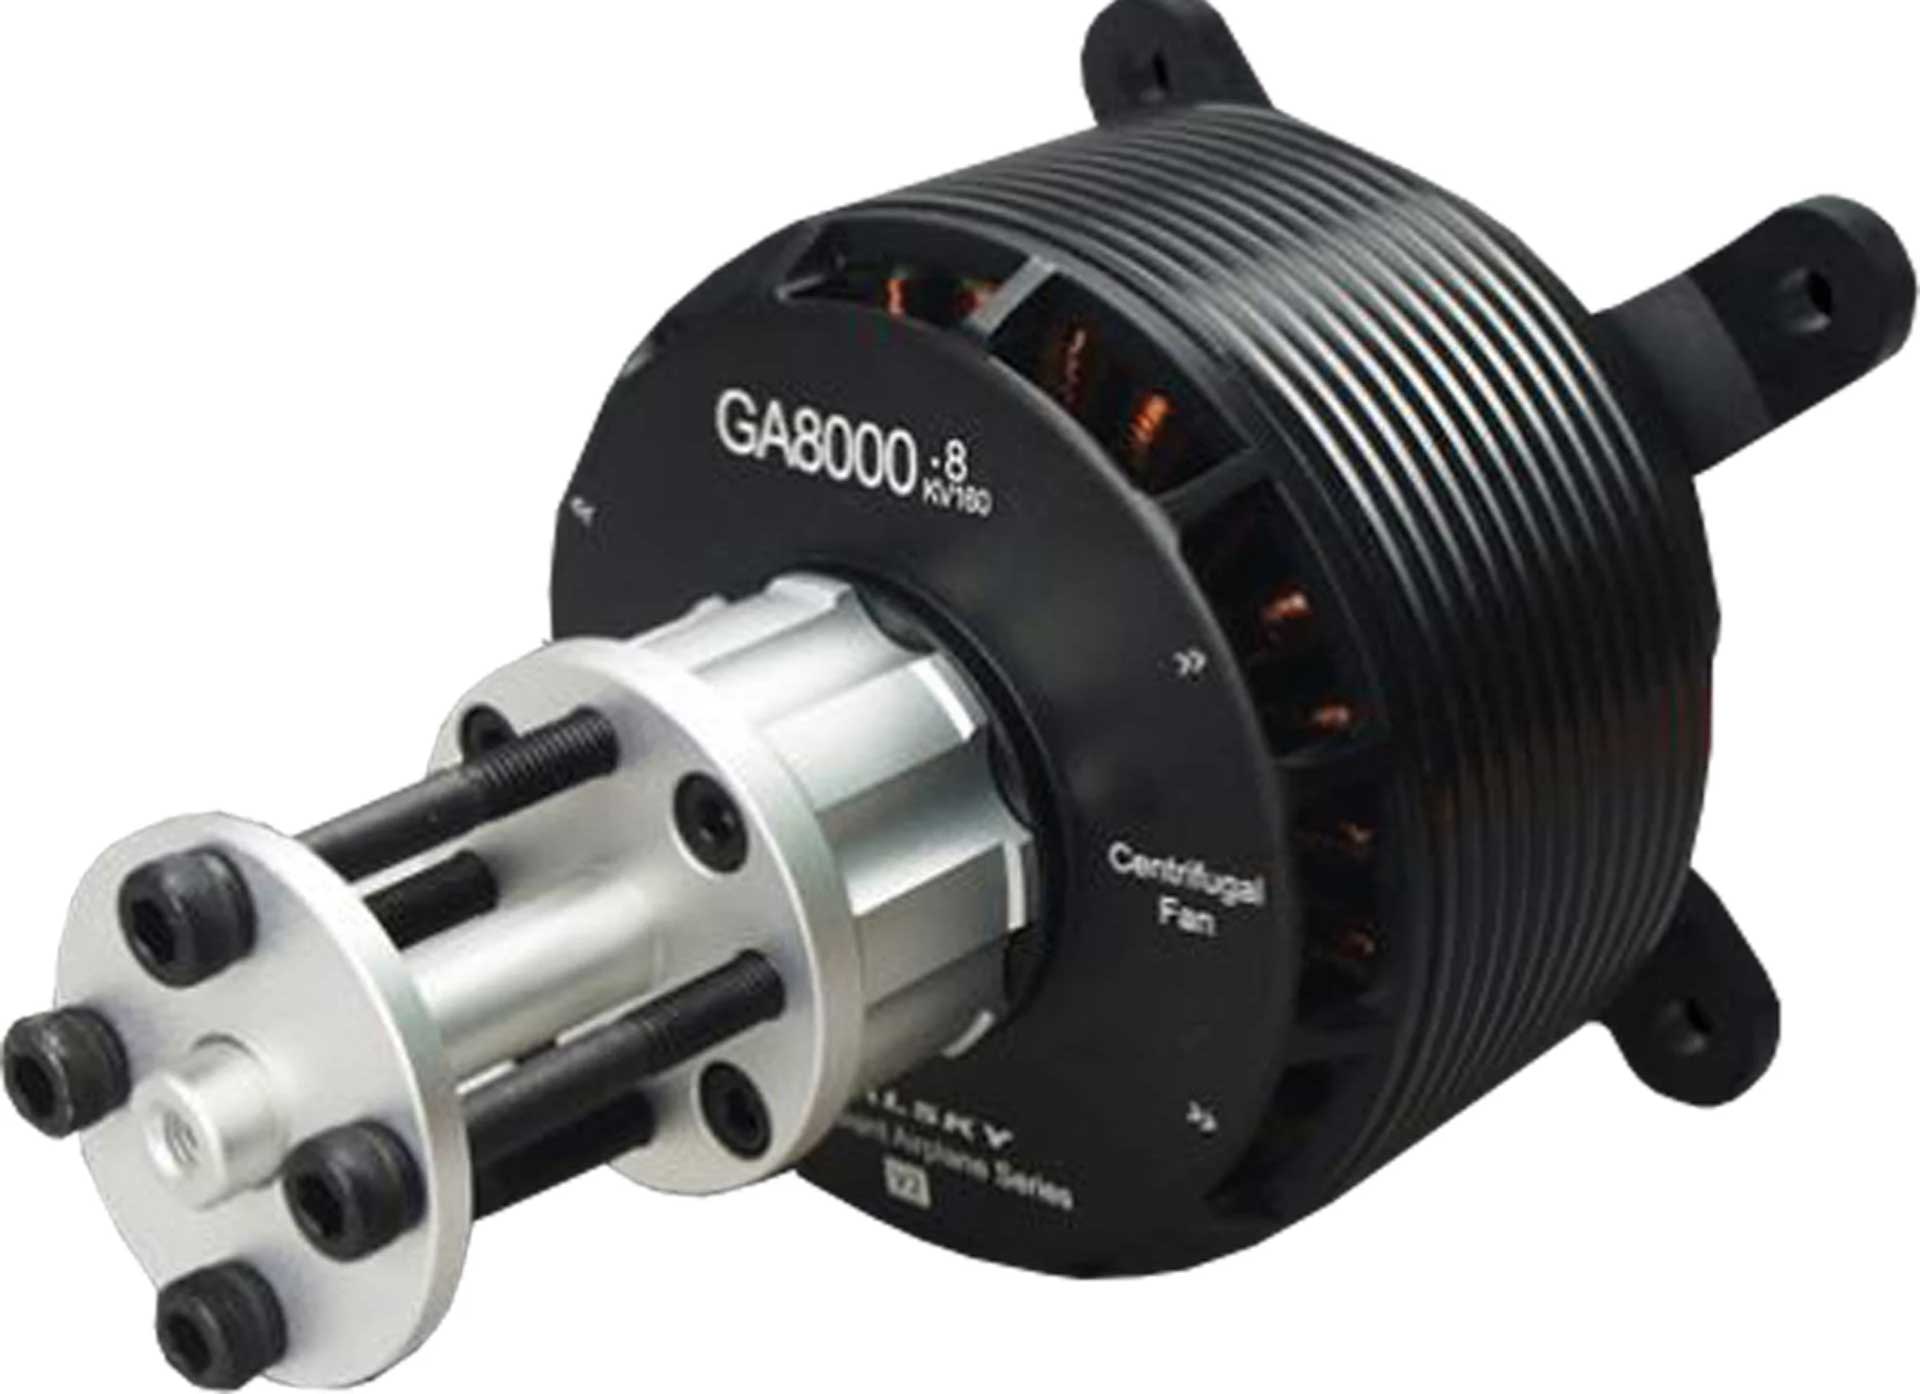 DUALSKY XMotor GA8000.9 140 K/V 8000W Brushless Motor